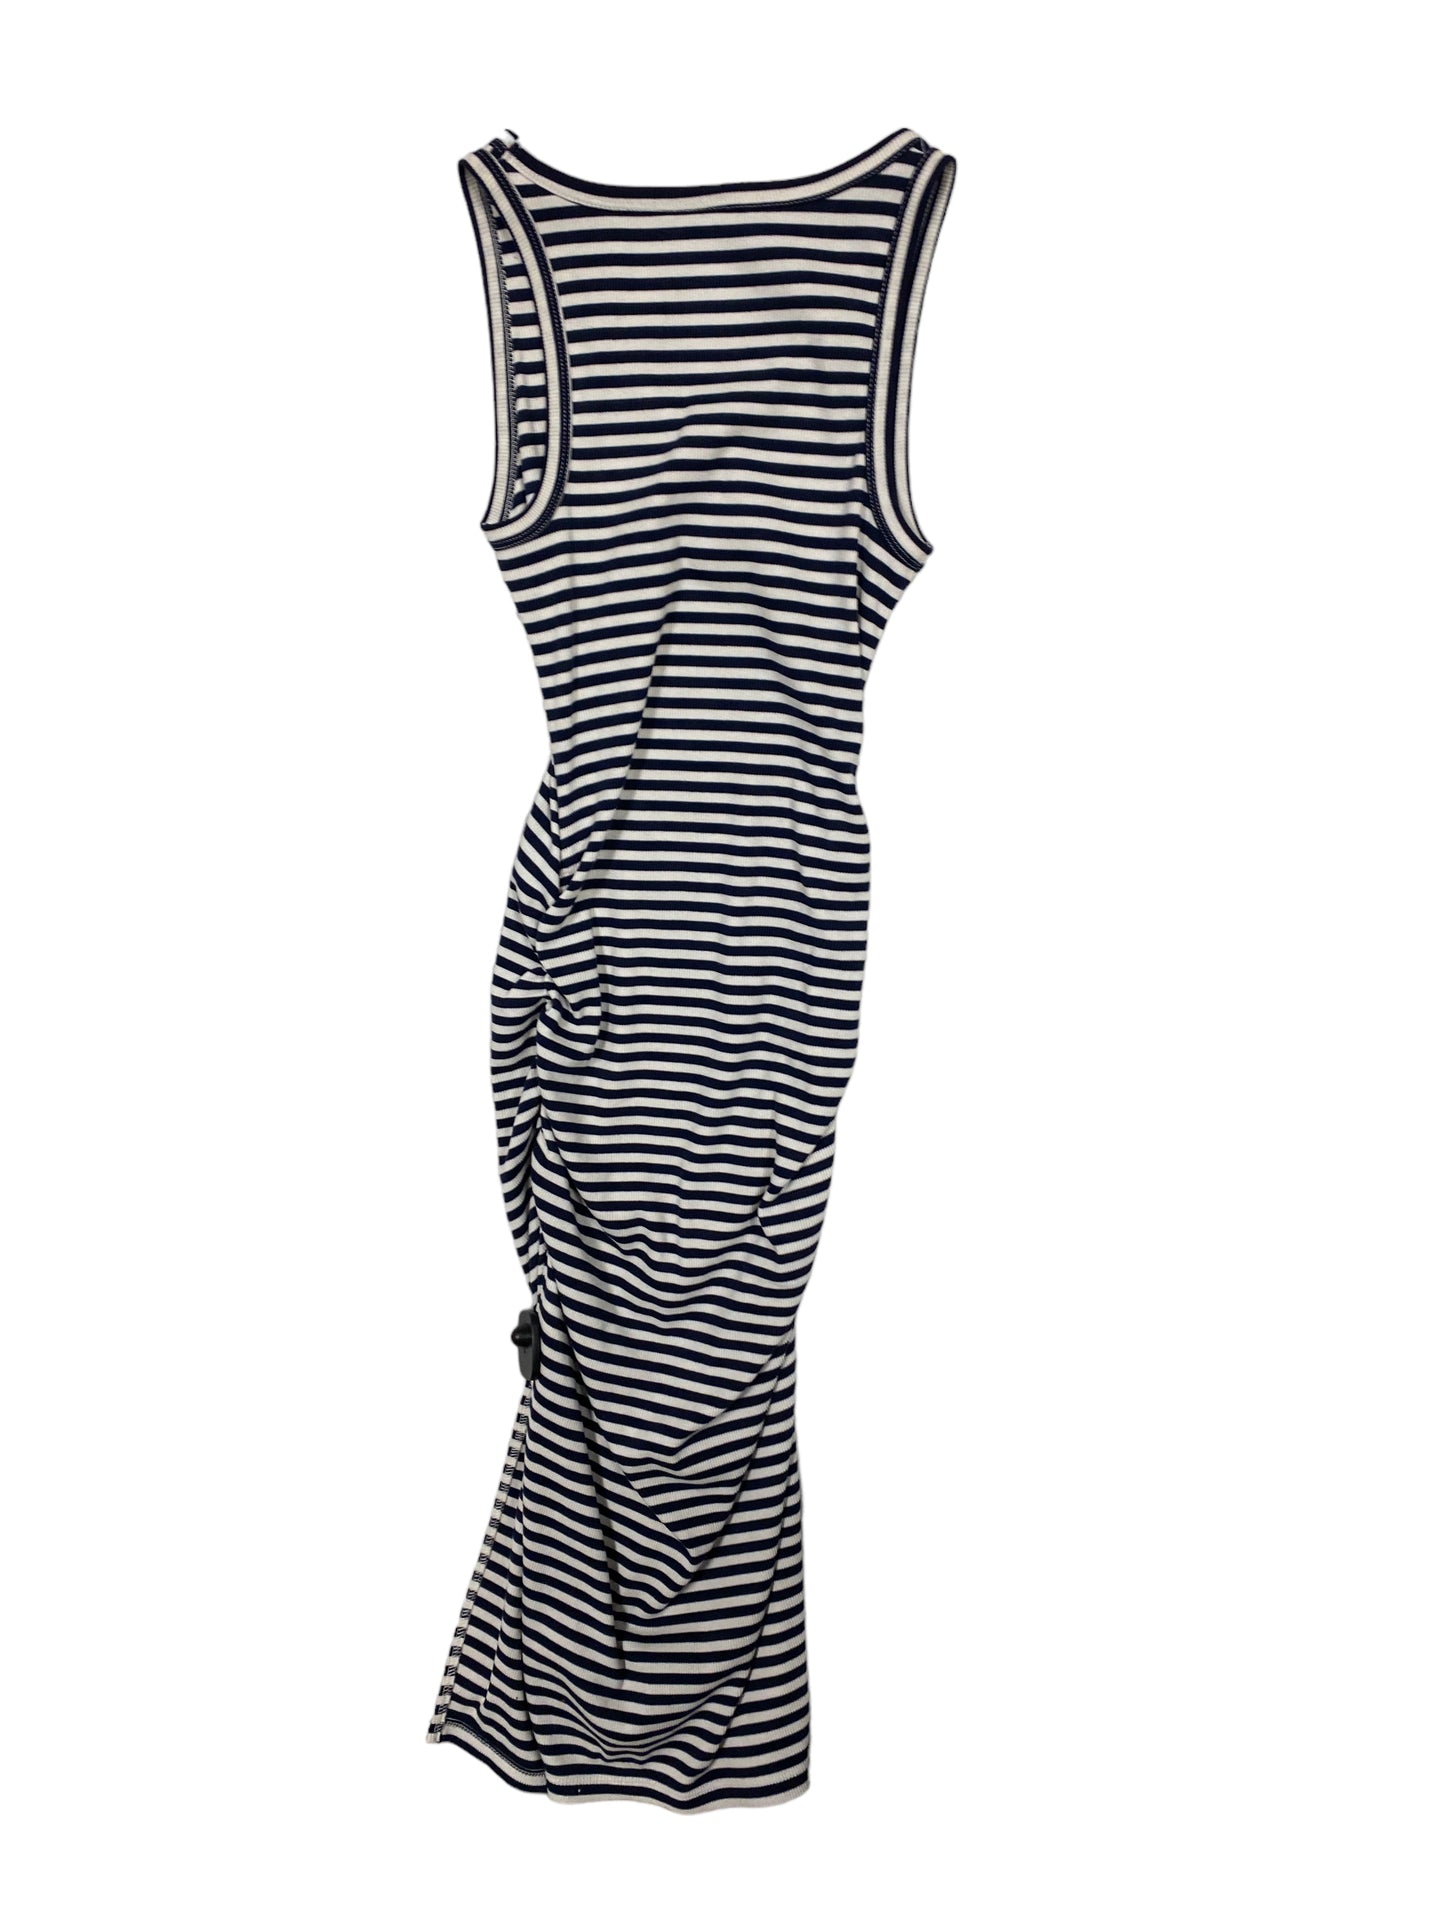 Striped Pattern Dress Casual Midi A New Day, Size Xs